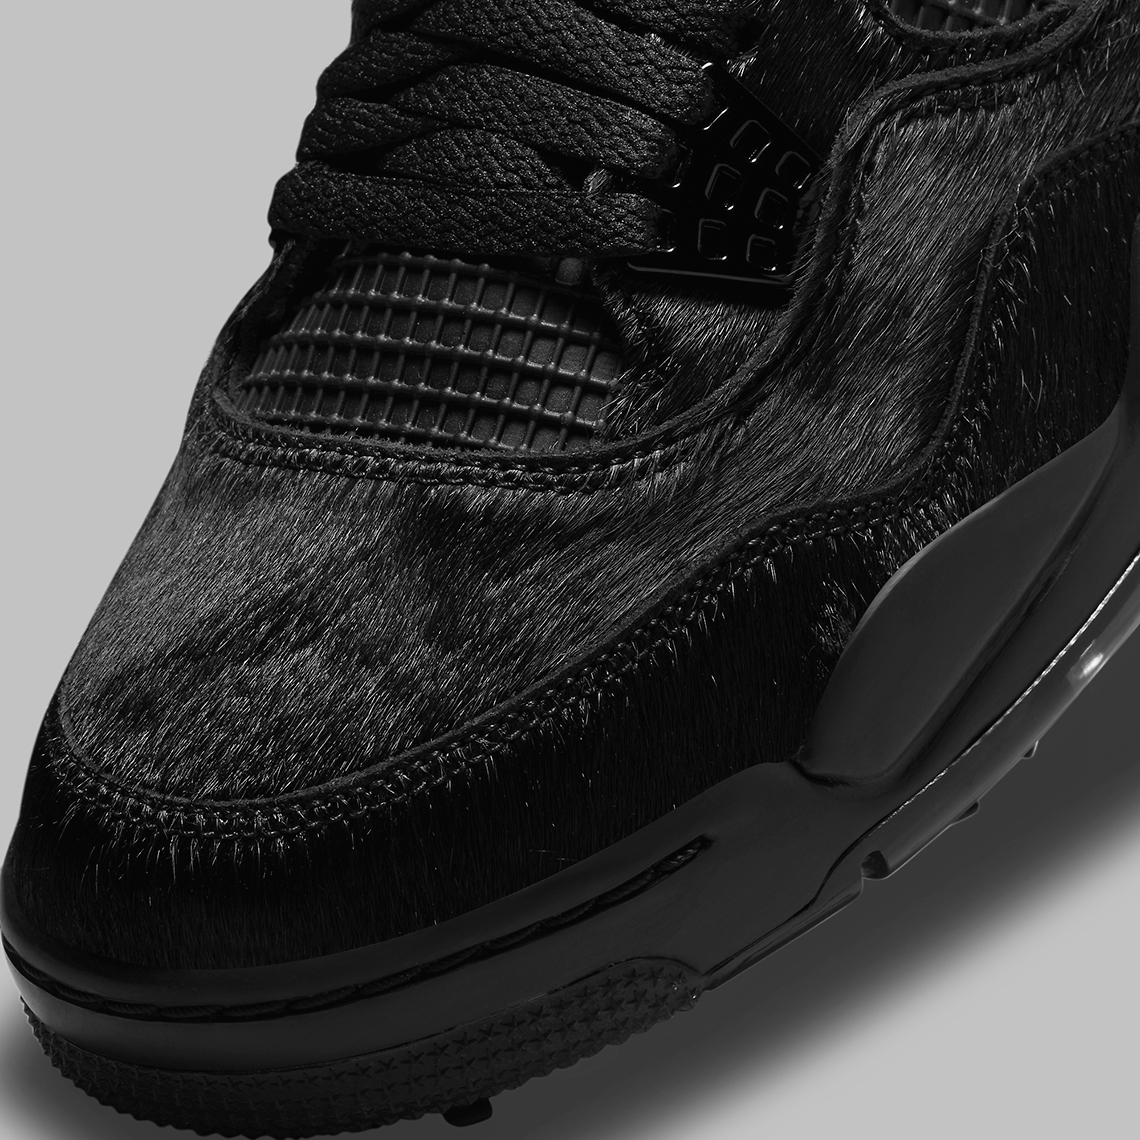 Air Jordan 4 Golf Black Cat CU9981-001 Release | SneakerNews.com